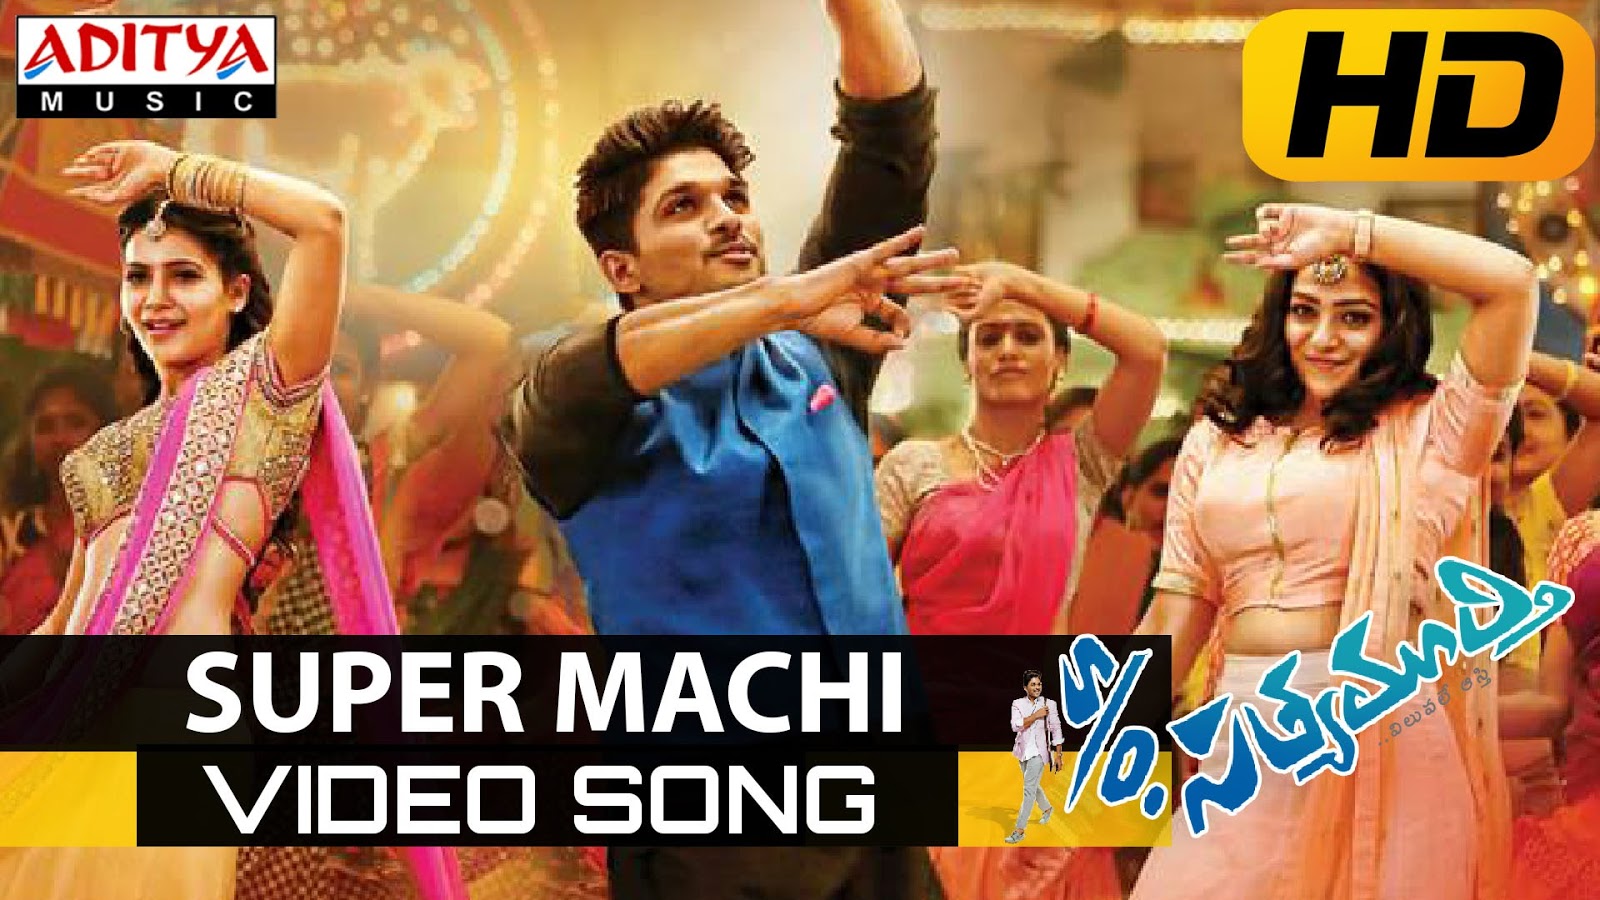 Telugu movie songs lyrics: Super Machi song Lyrics from Son of Satyamurthy  movie Allu Arjun